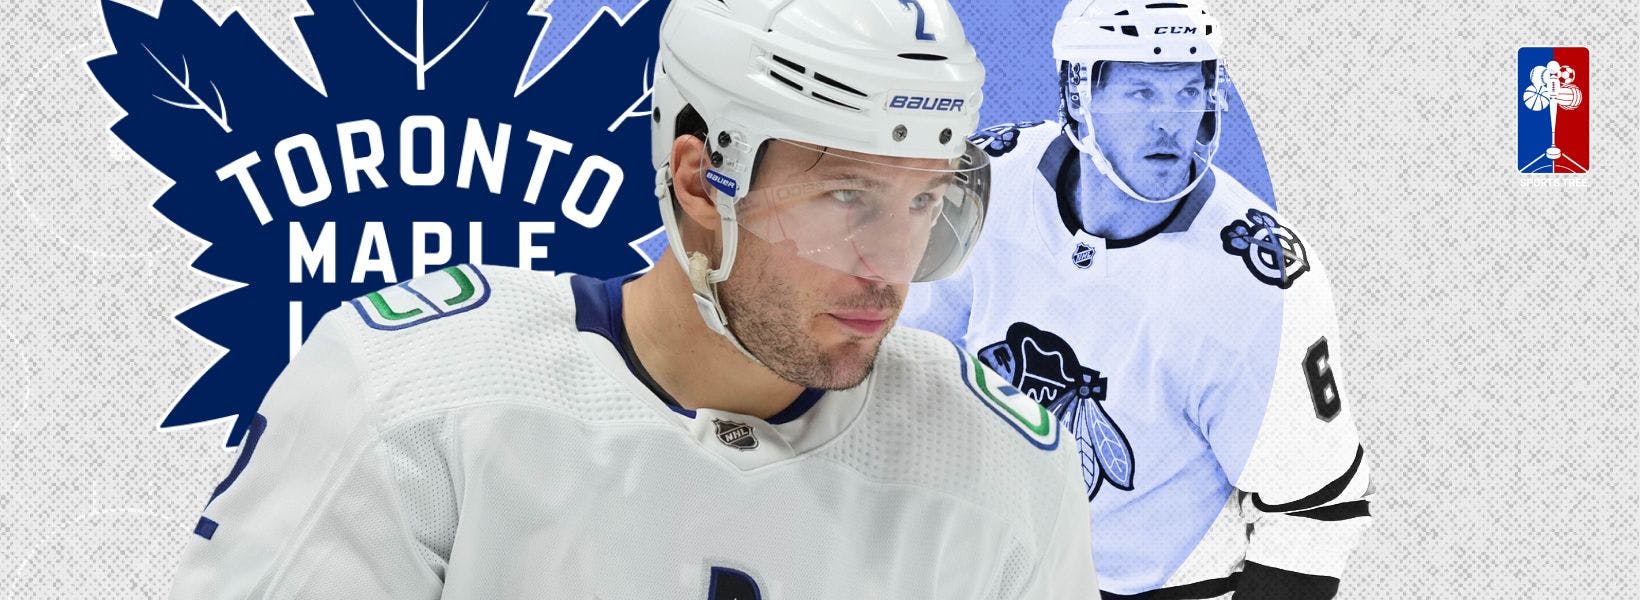 Toronto Maple Leafs latest trades Jake McCabe and Luke Schenn